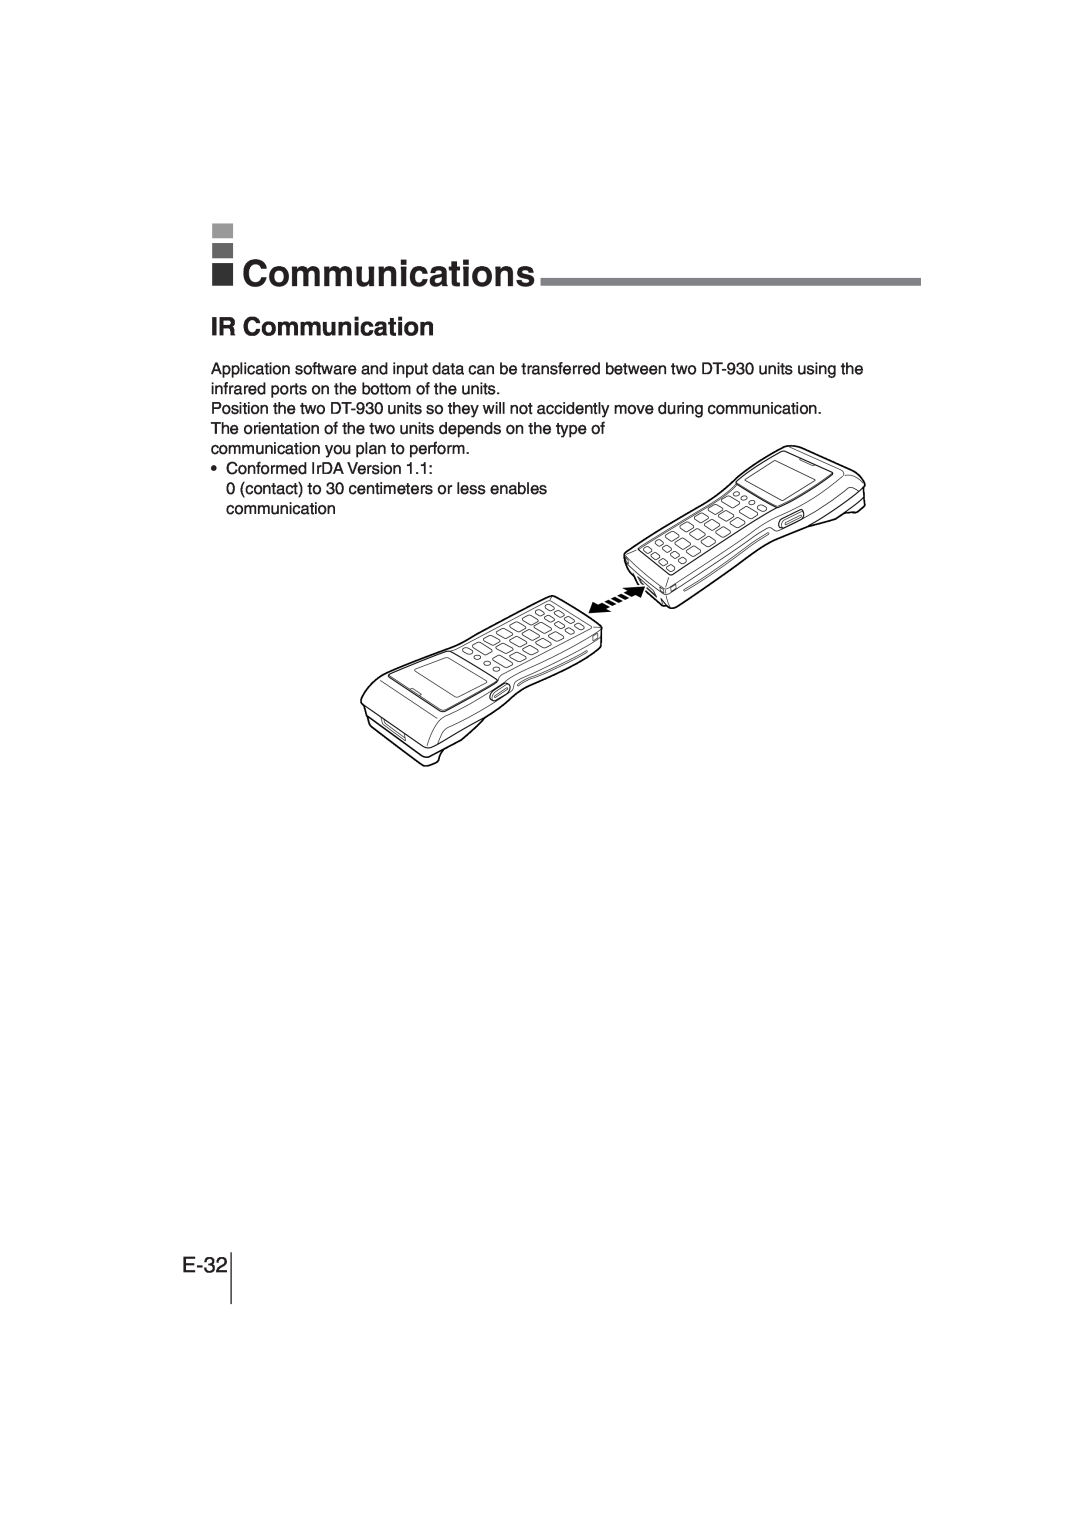 Casio DT-930 manual Communications, IR Communication, E-32 